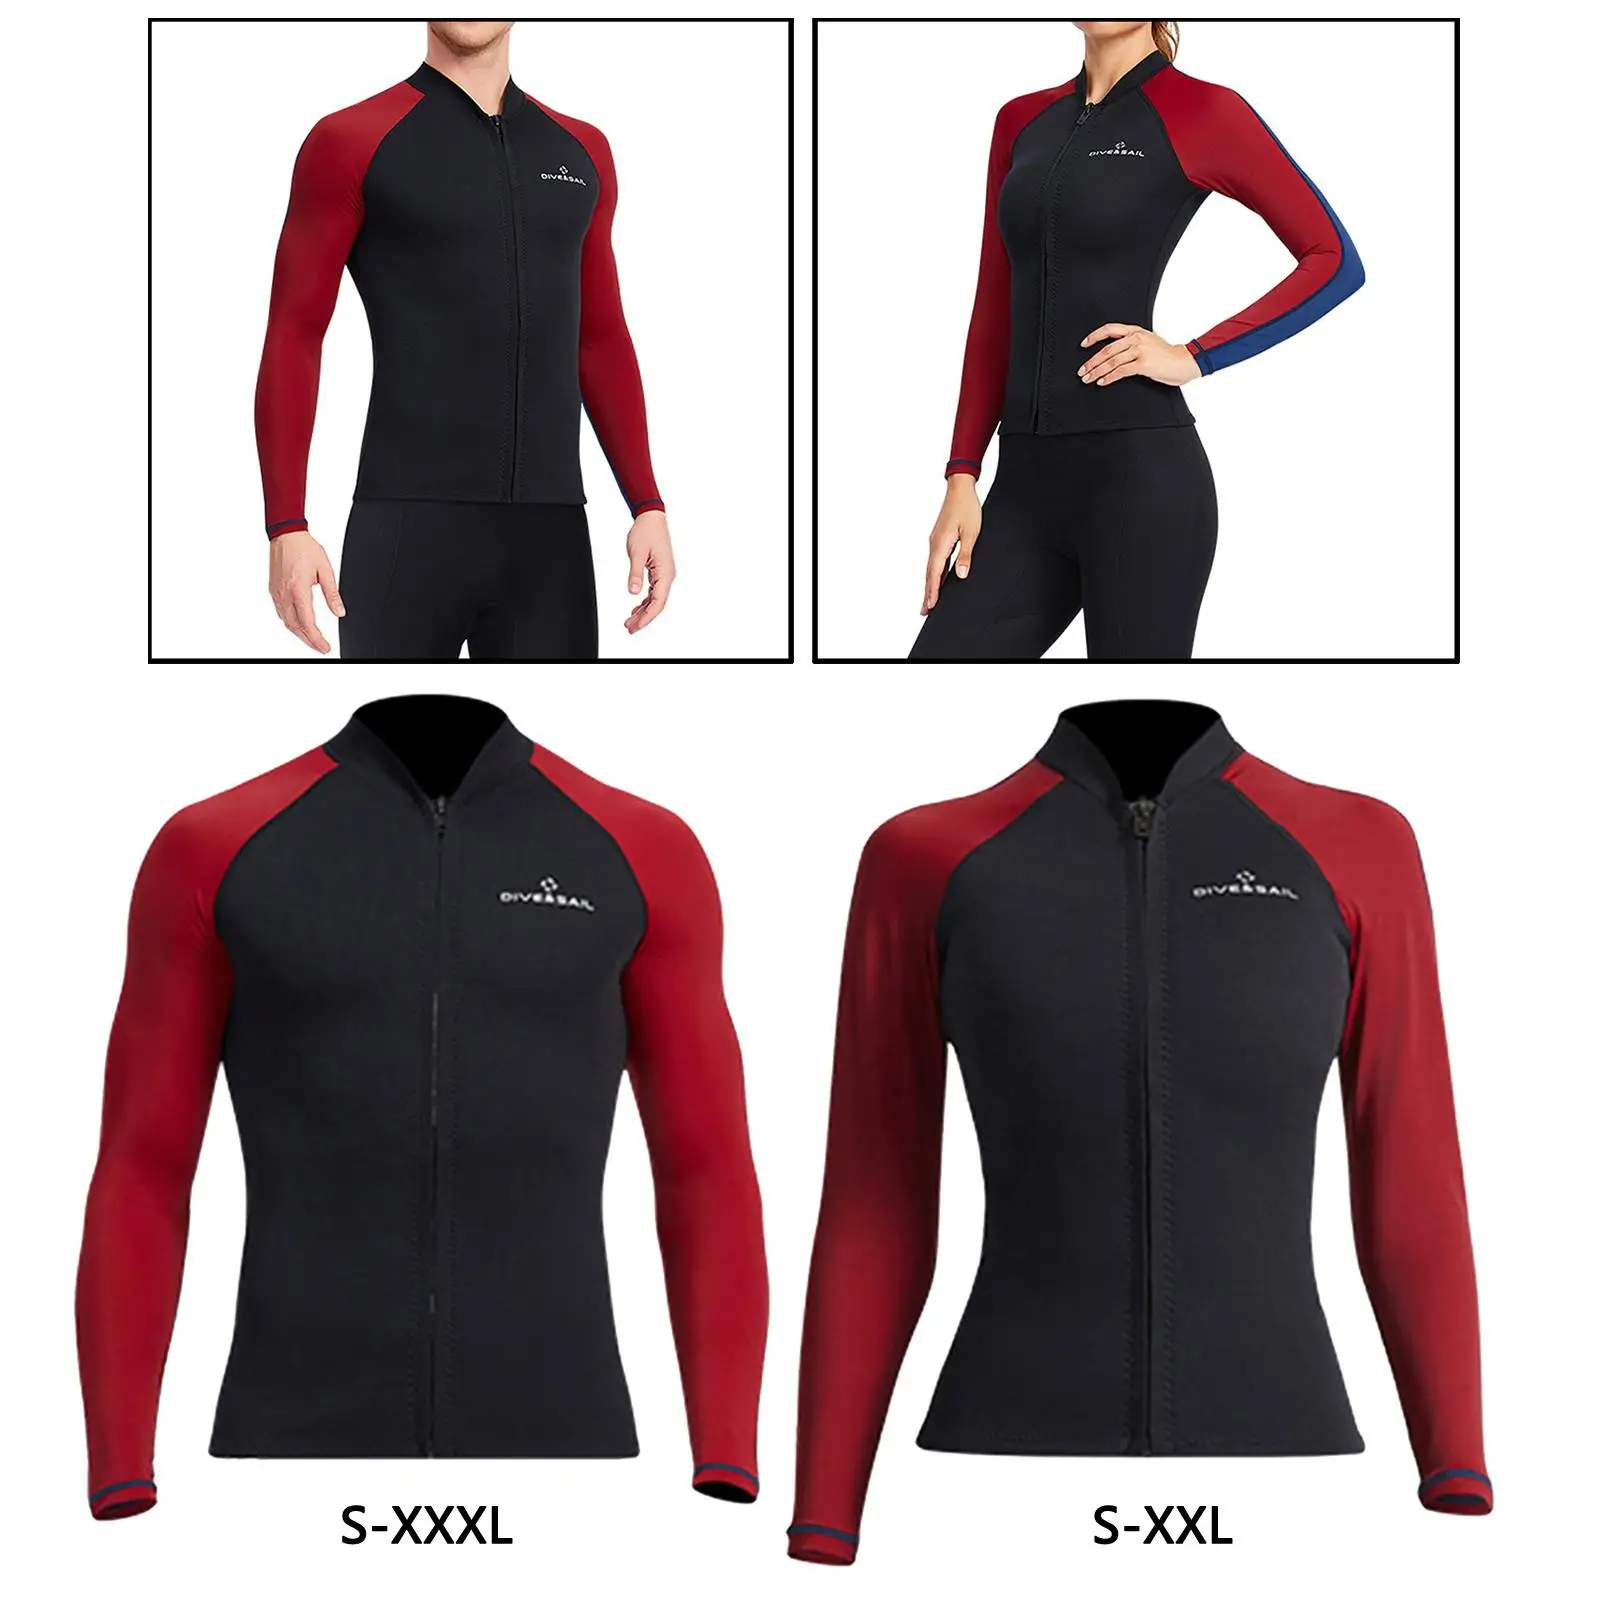 Men Women 1.5mm Neoprene Wetsuit Long Sleeve Top Jacket Keep Warm Diving Swimming Surf Scuba Wet Suits Swimsuit Water Sports